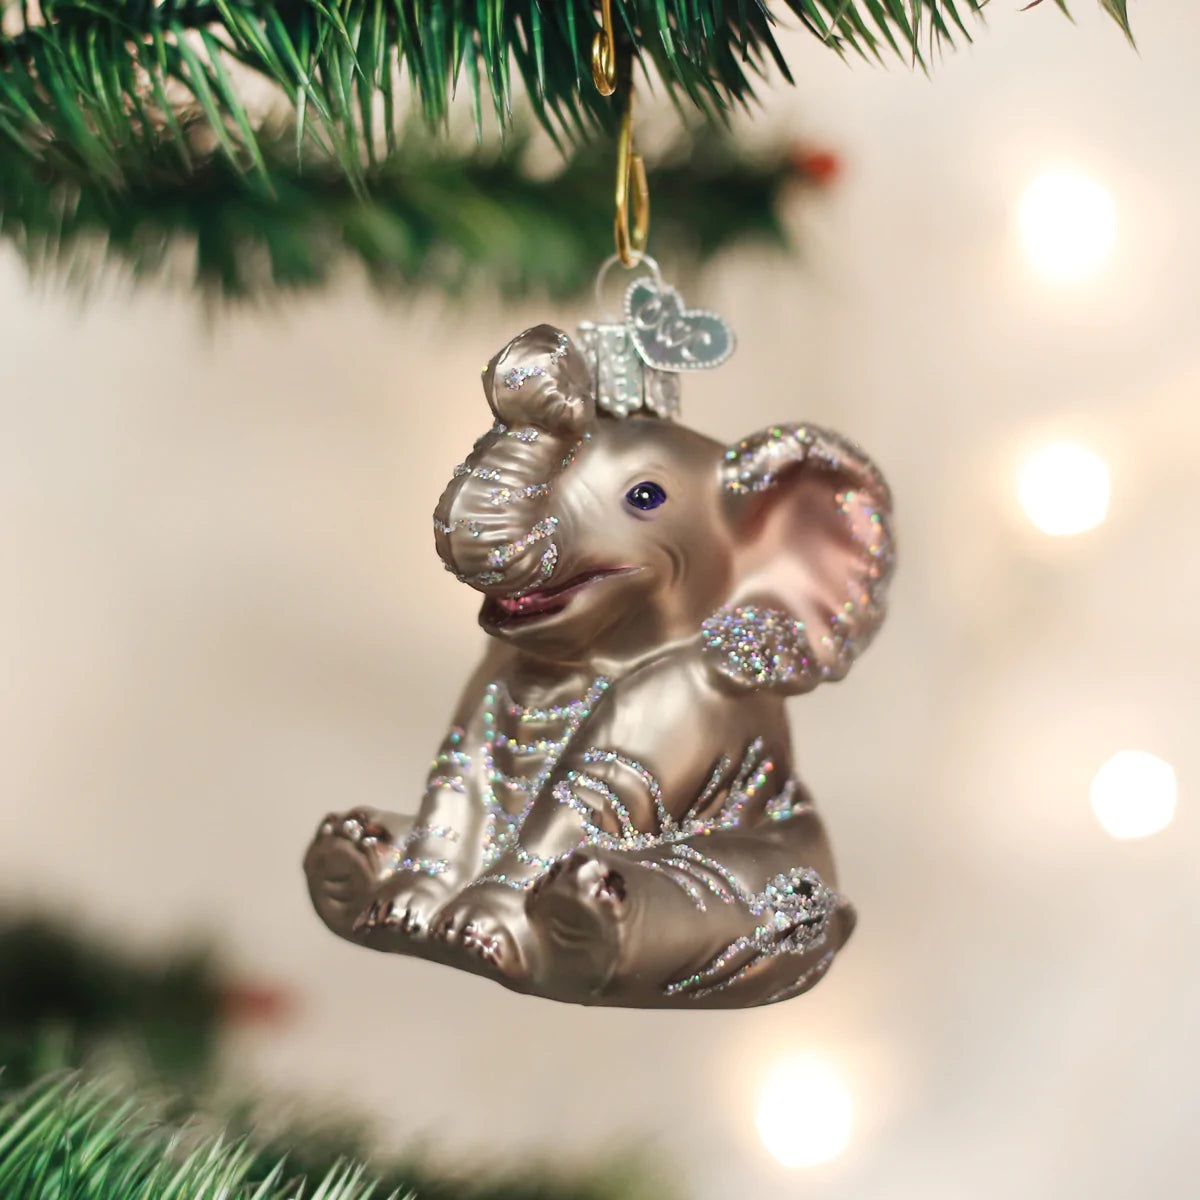 Little Elephant Ornament